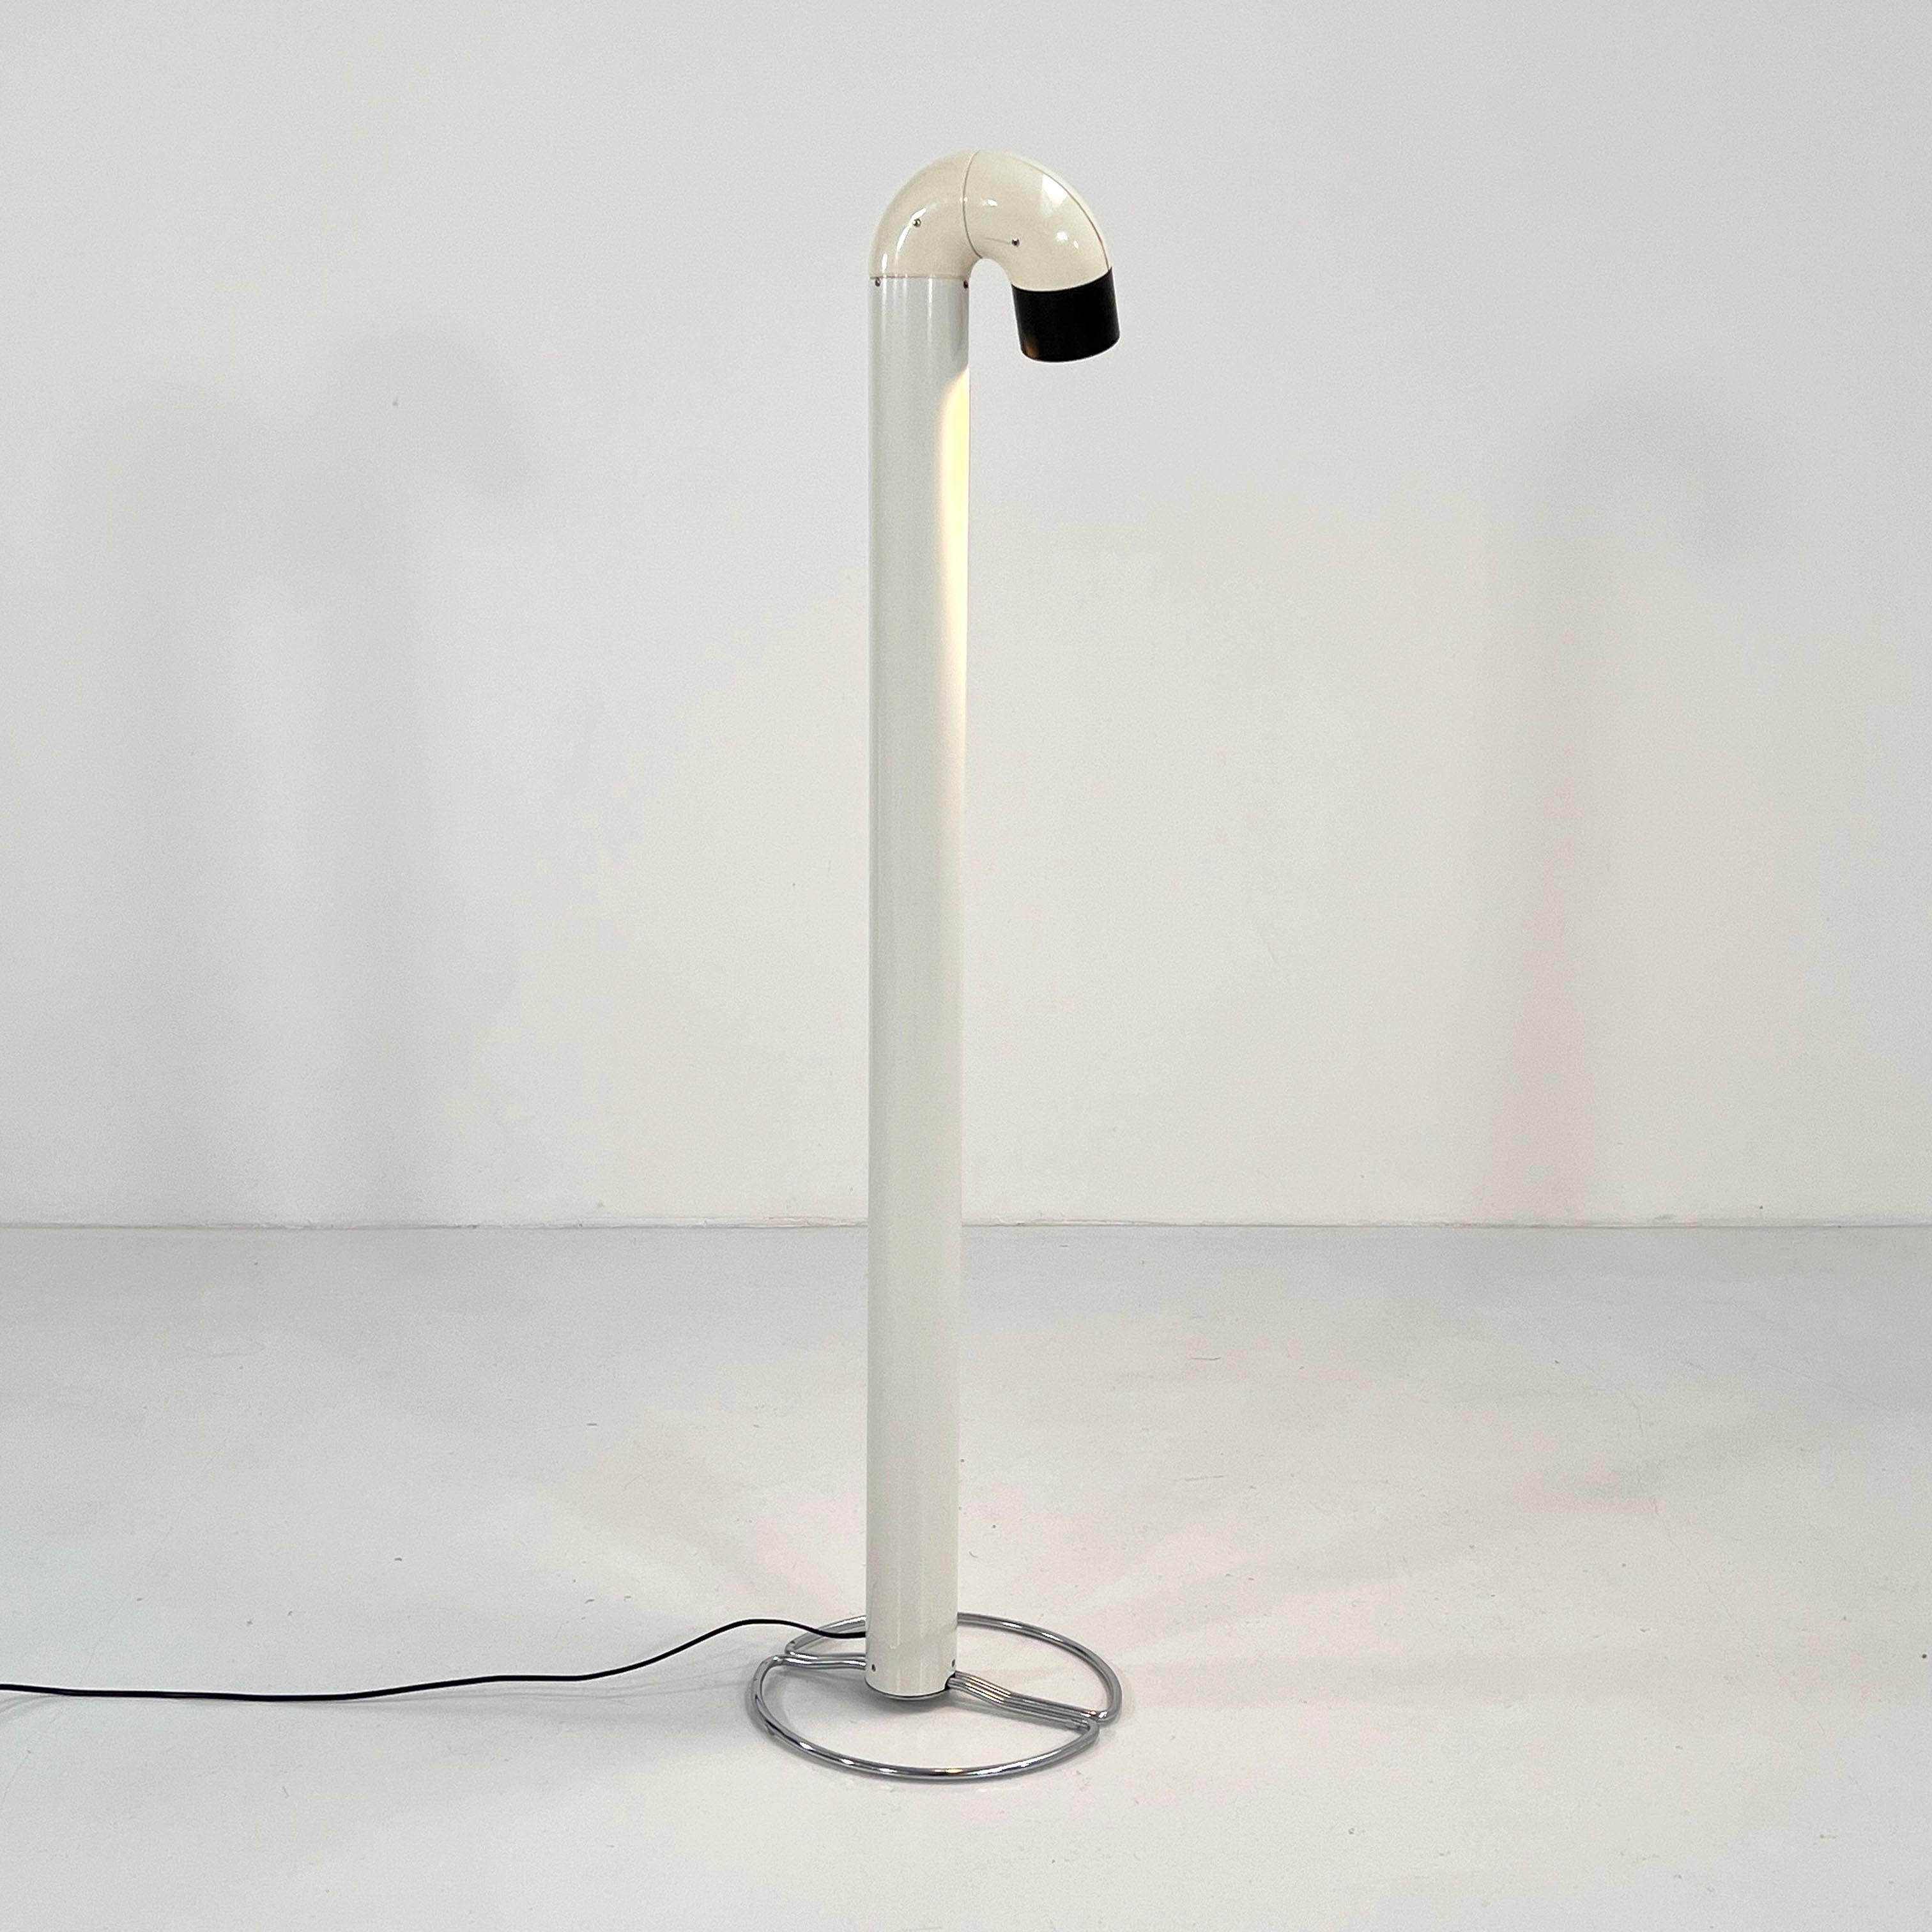 Flamingo Floor Lamp by Kwok Hoi Chan for Concord, 1960s
Producer - Concord
Designer - Kwok Hoi Chan
Model - Flamingo Floor Lamp
Design Period - Sixties
Measurements - Width 32 cm x Depth 32 cm x Height 132 cm
Materials - Metal
Color - White, Black,